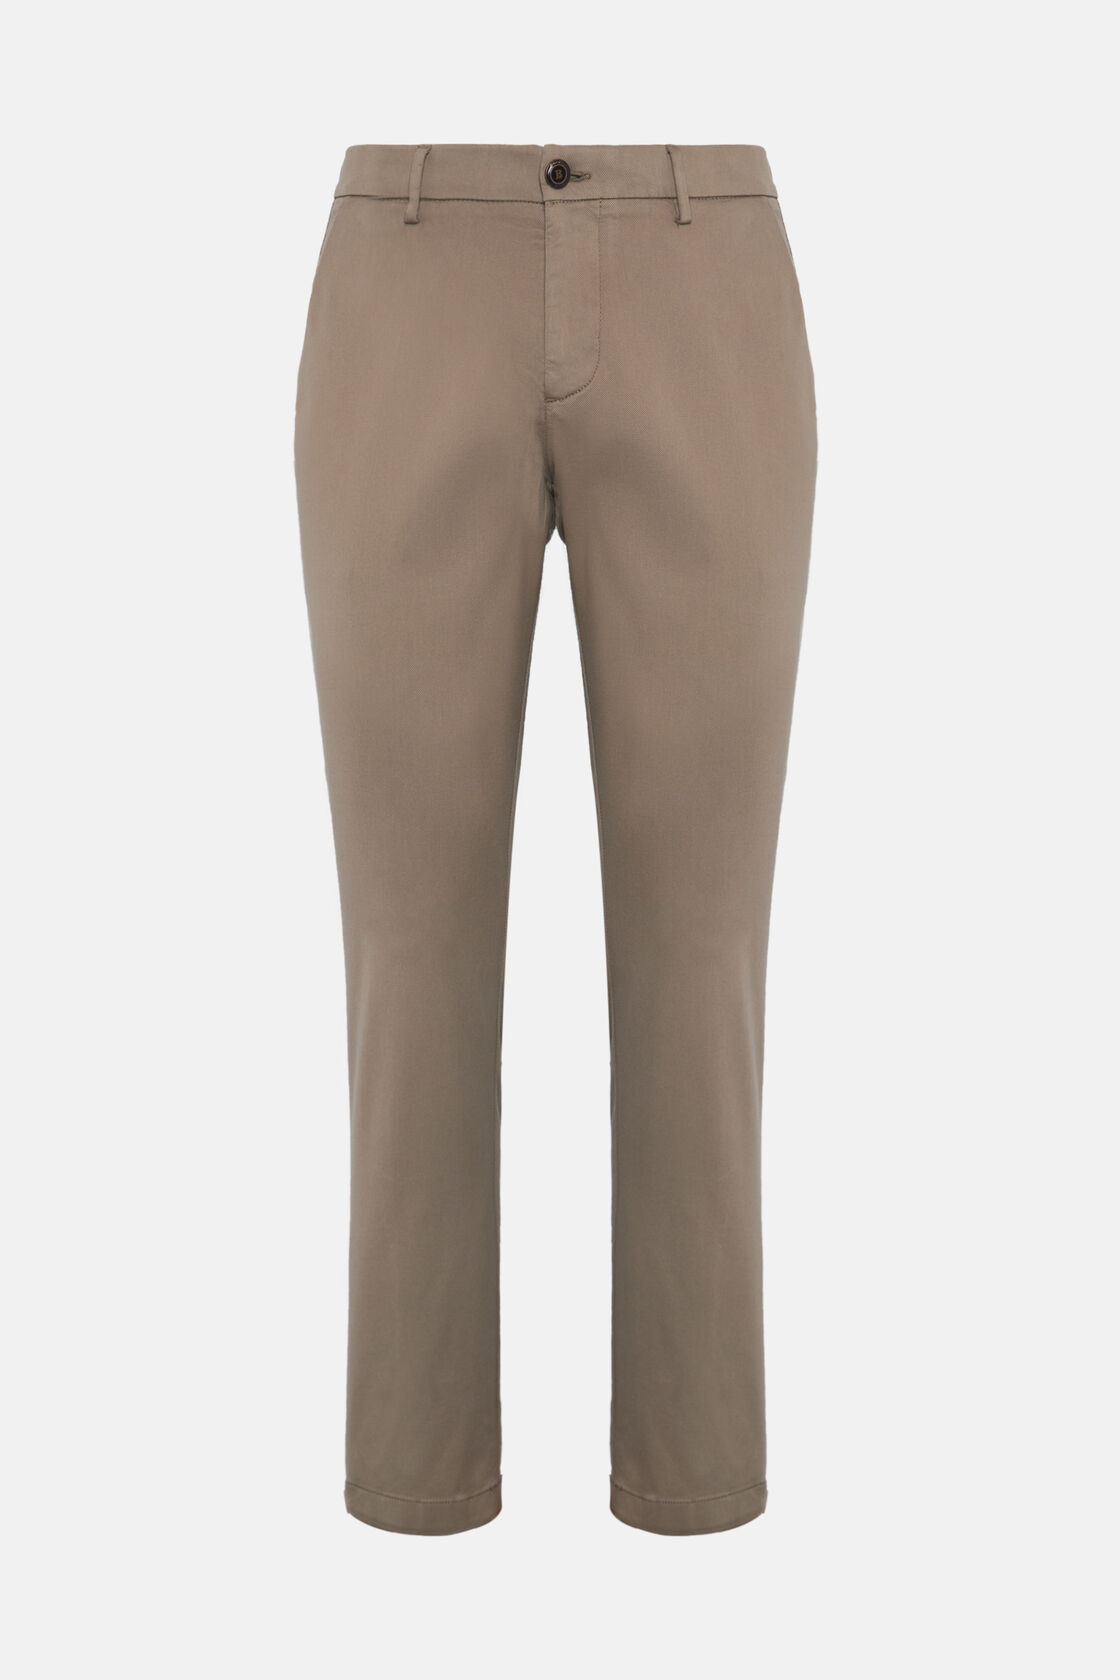 Pantalon En Coton Tencel Extensible, Taupe, hi-res